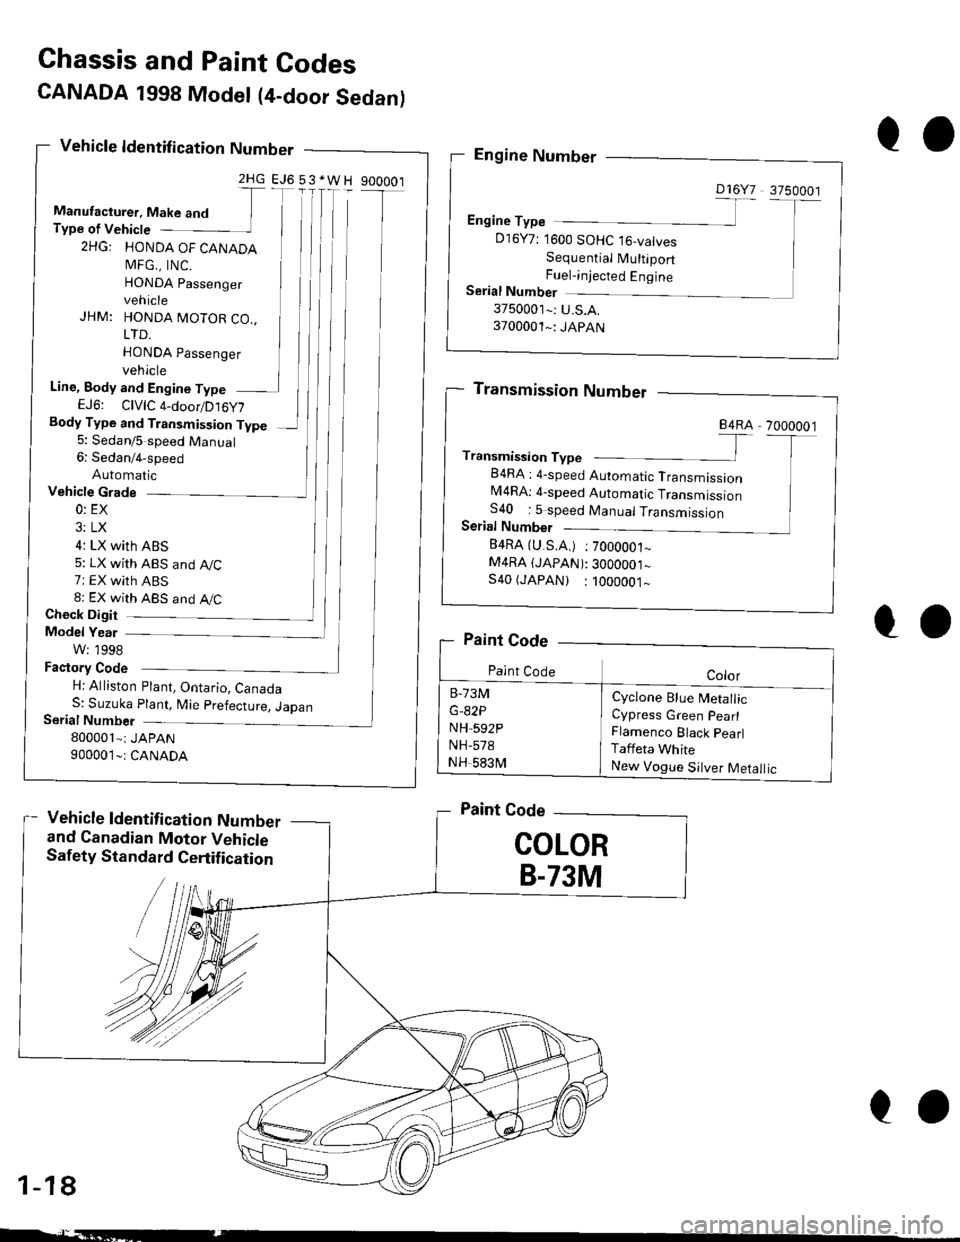 HONDA CIVIC 1998 6.G User Guide CANADA 1998 Model (4-door Sedanl
Vehicle ldentification Number
Chassis and Paint Codes
2HG.I
Manufacturer, Make andType of Vehicte I2HG: HONDA OF CANADA ]MFG,, INC.
HONDA passenger lvehicle
JHM: HONDA